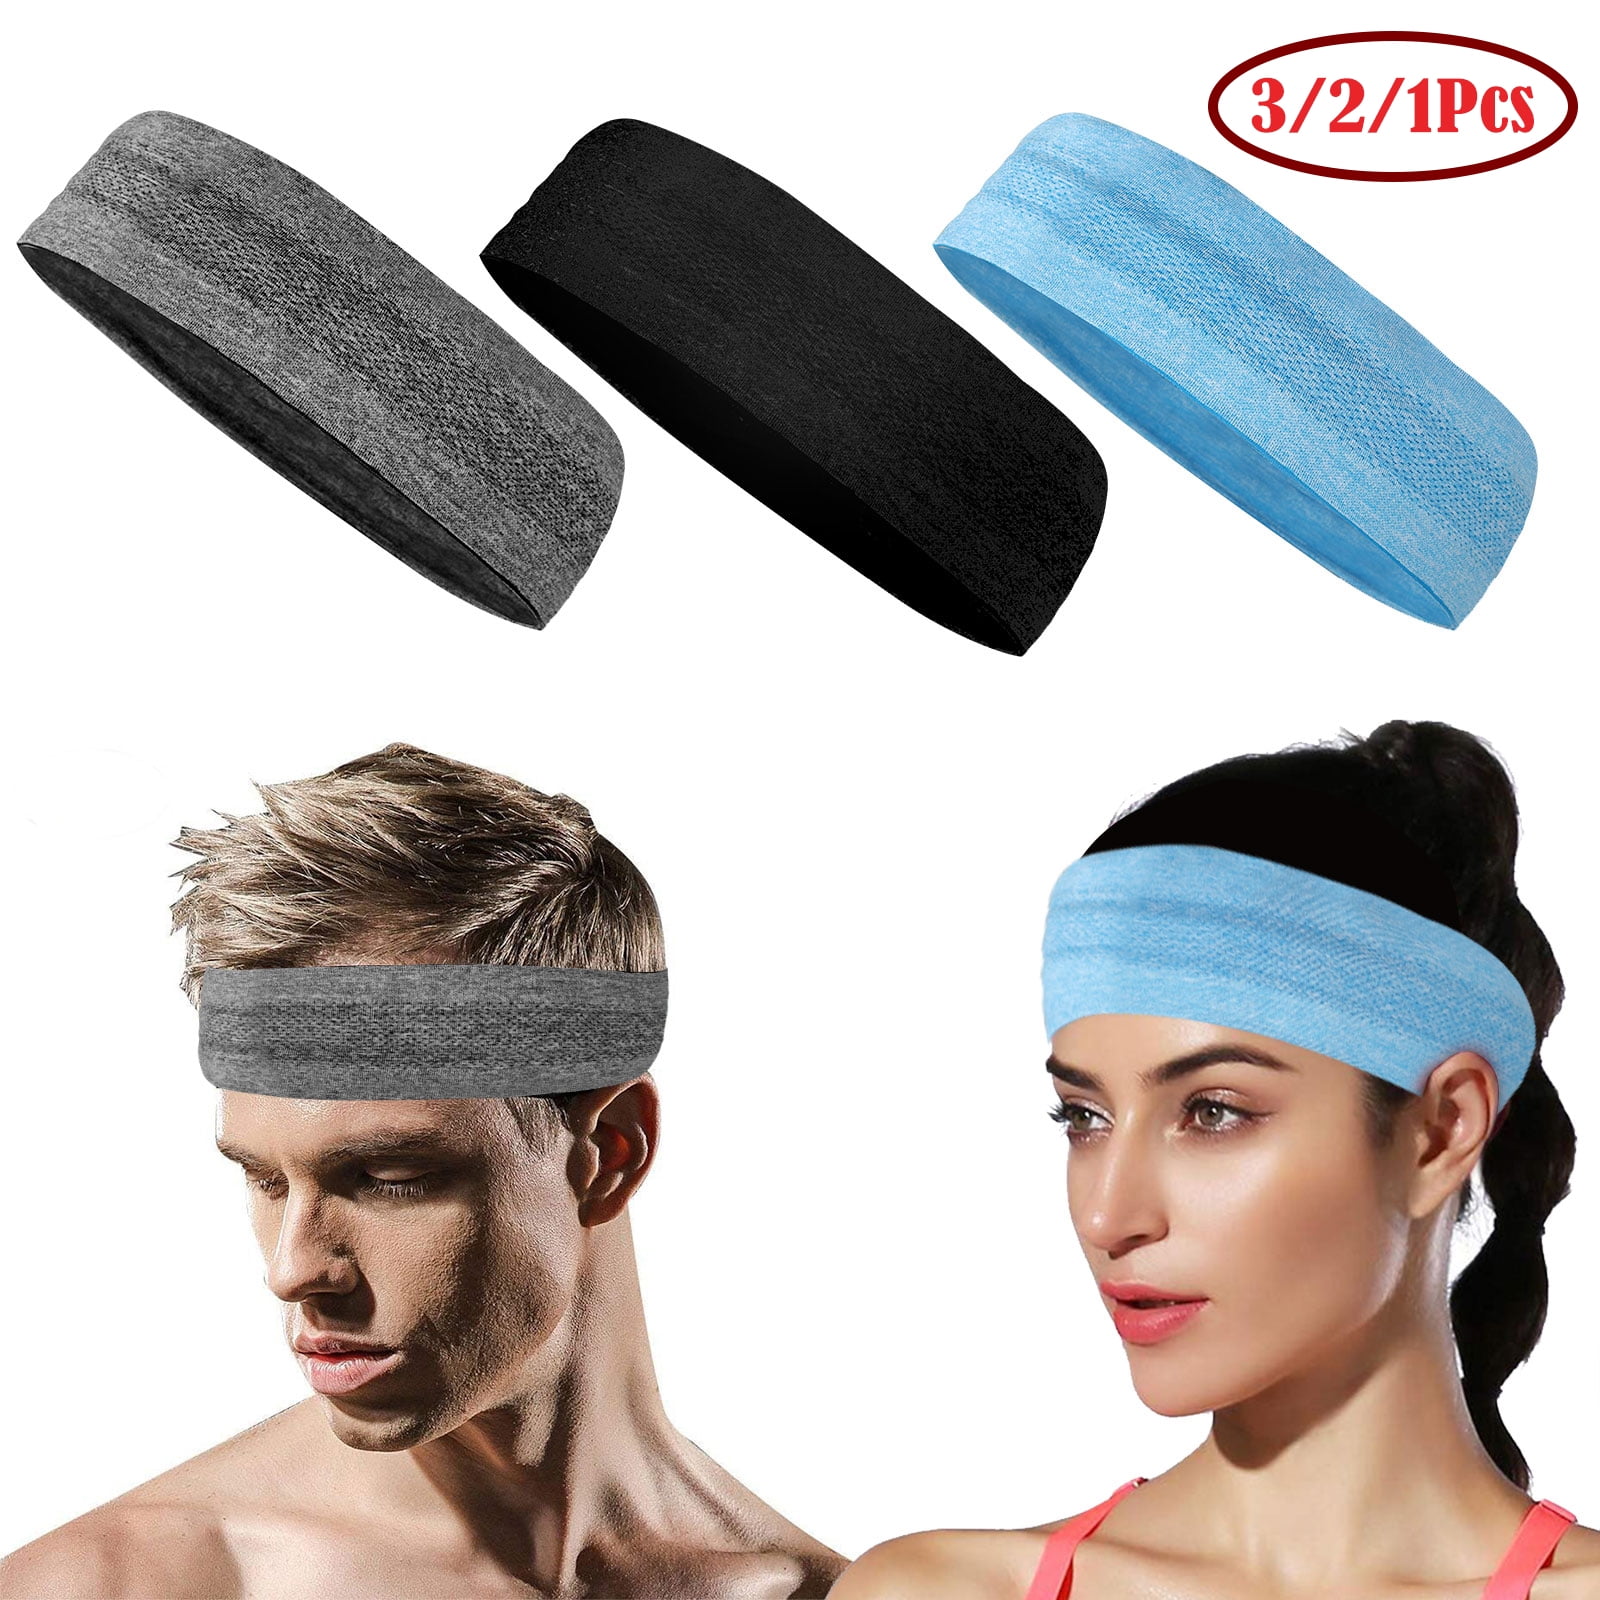 Ofoice Headbands for Men Women Sweatband Sports Headband for Running Yoga Basketball football stretchy headbands 3 Pack